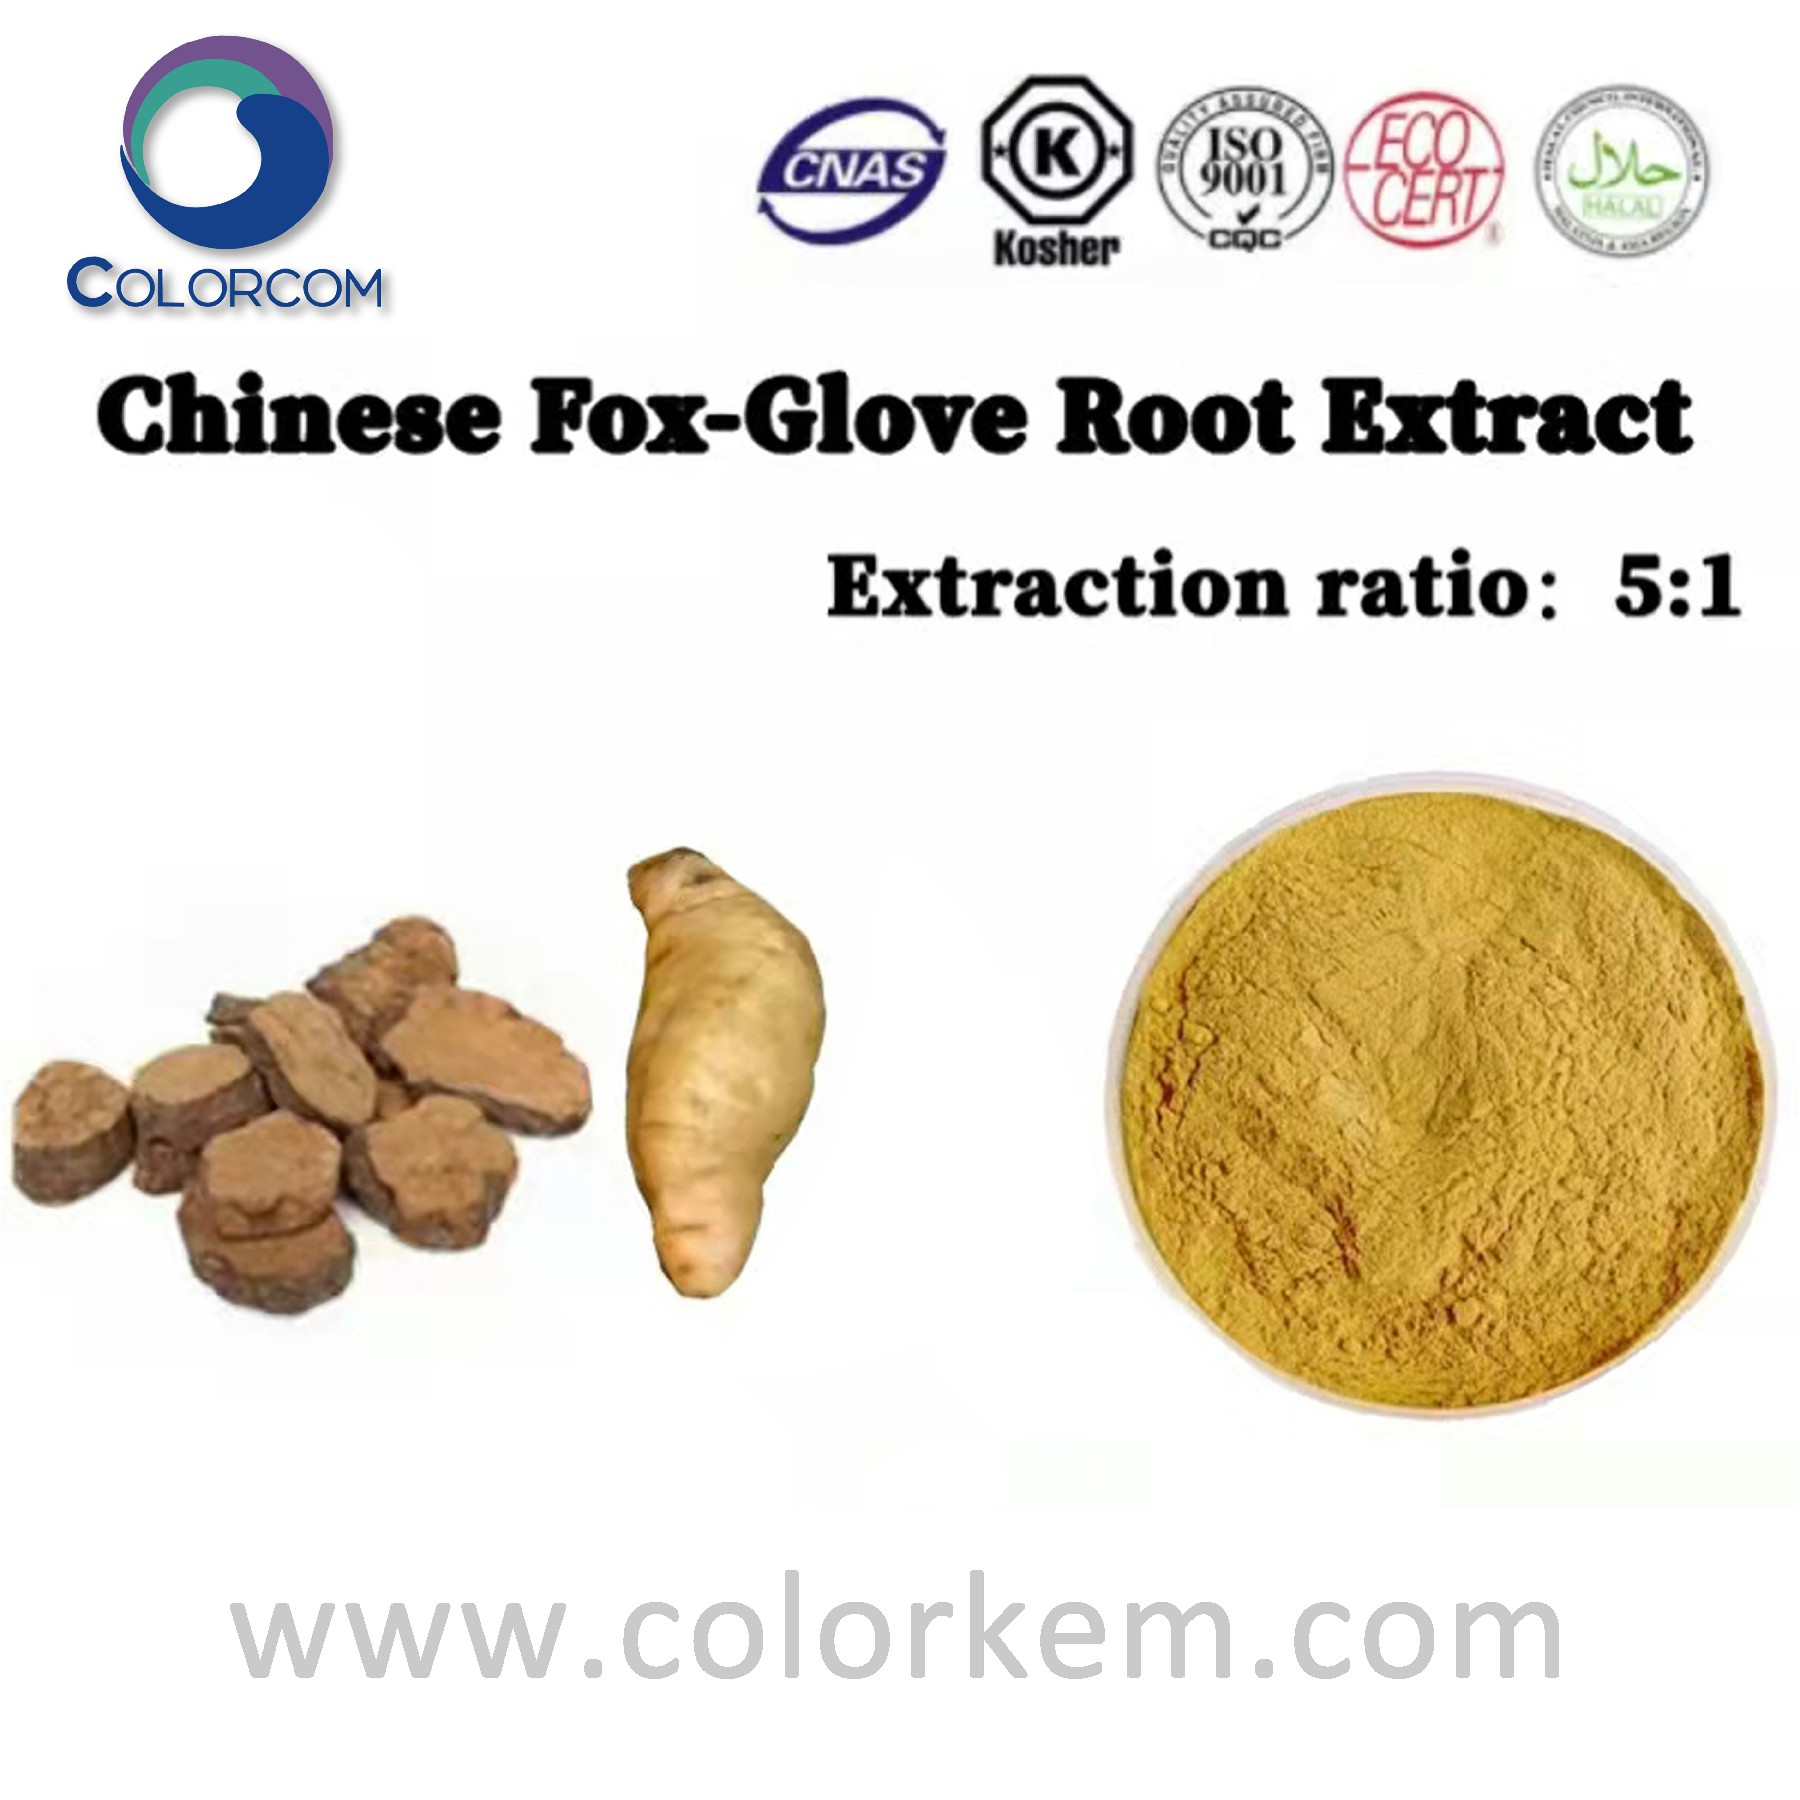 Chinese Fox-Glove Root Extract